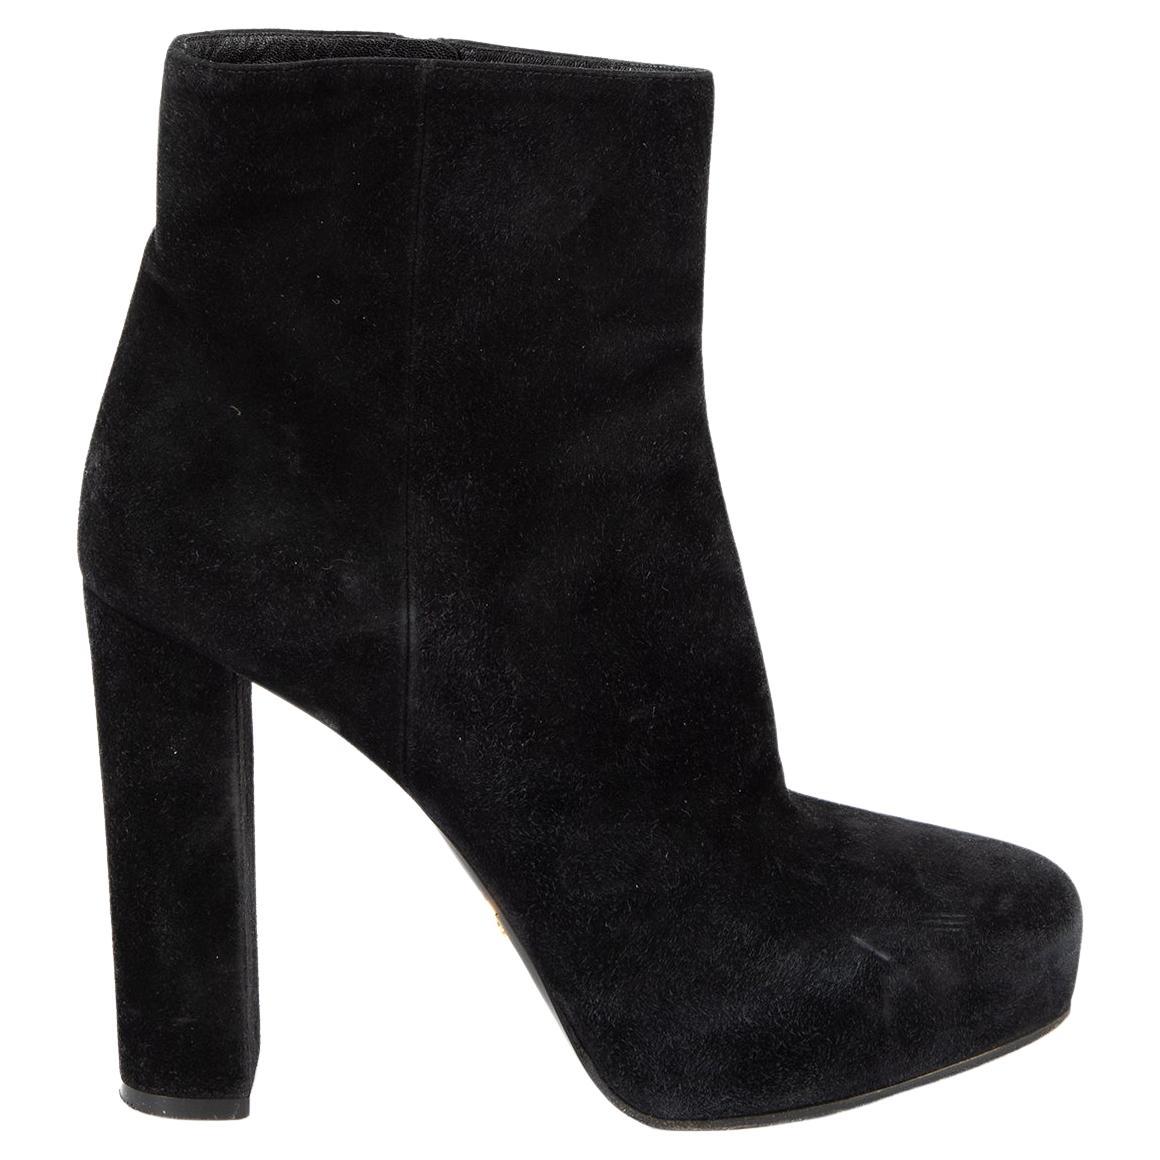 Pré-aimé Prada Women's Black Pointed Toe Platform Heeled Ankle Boot